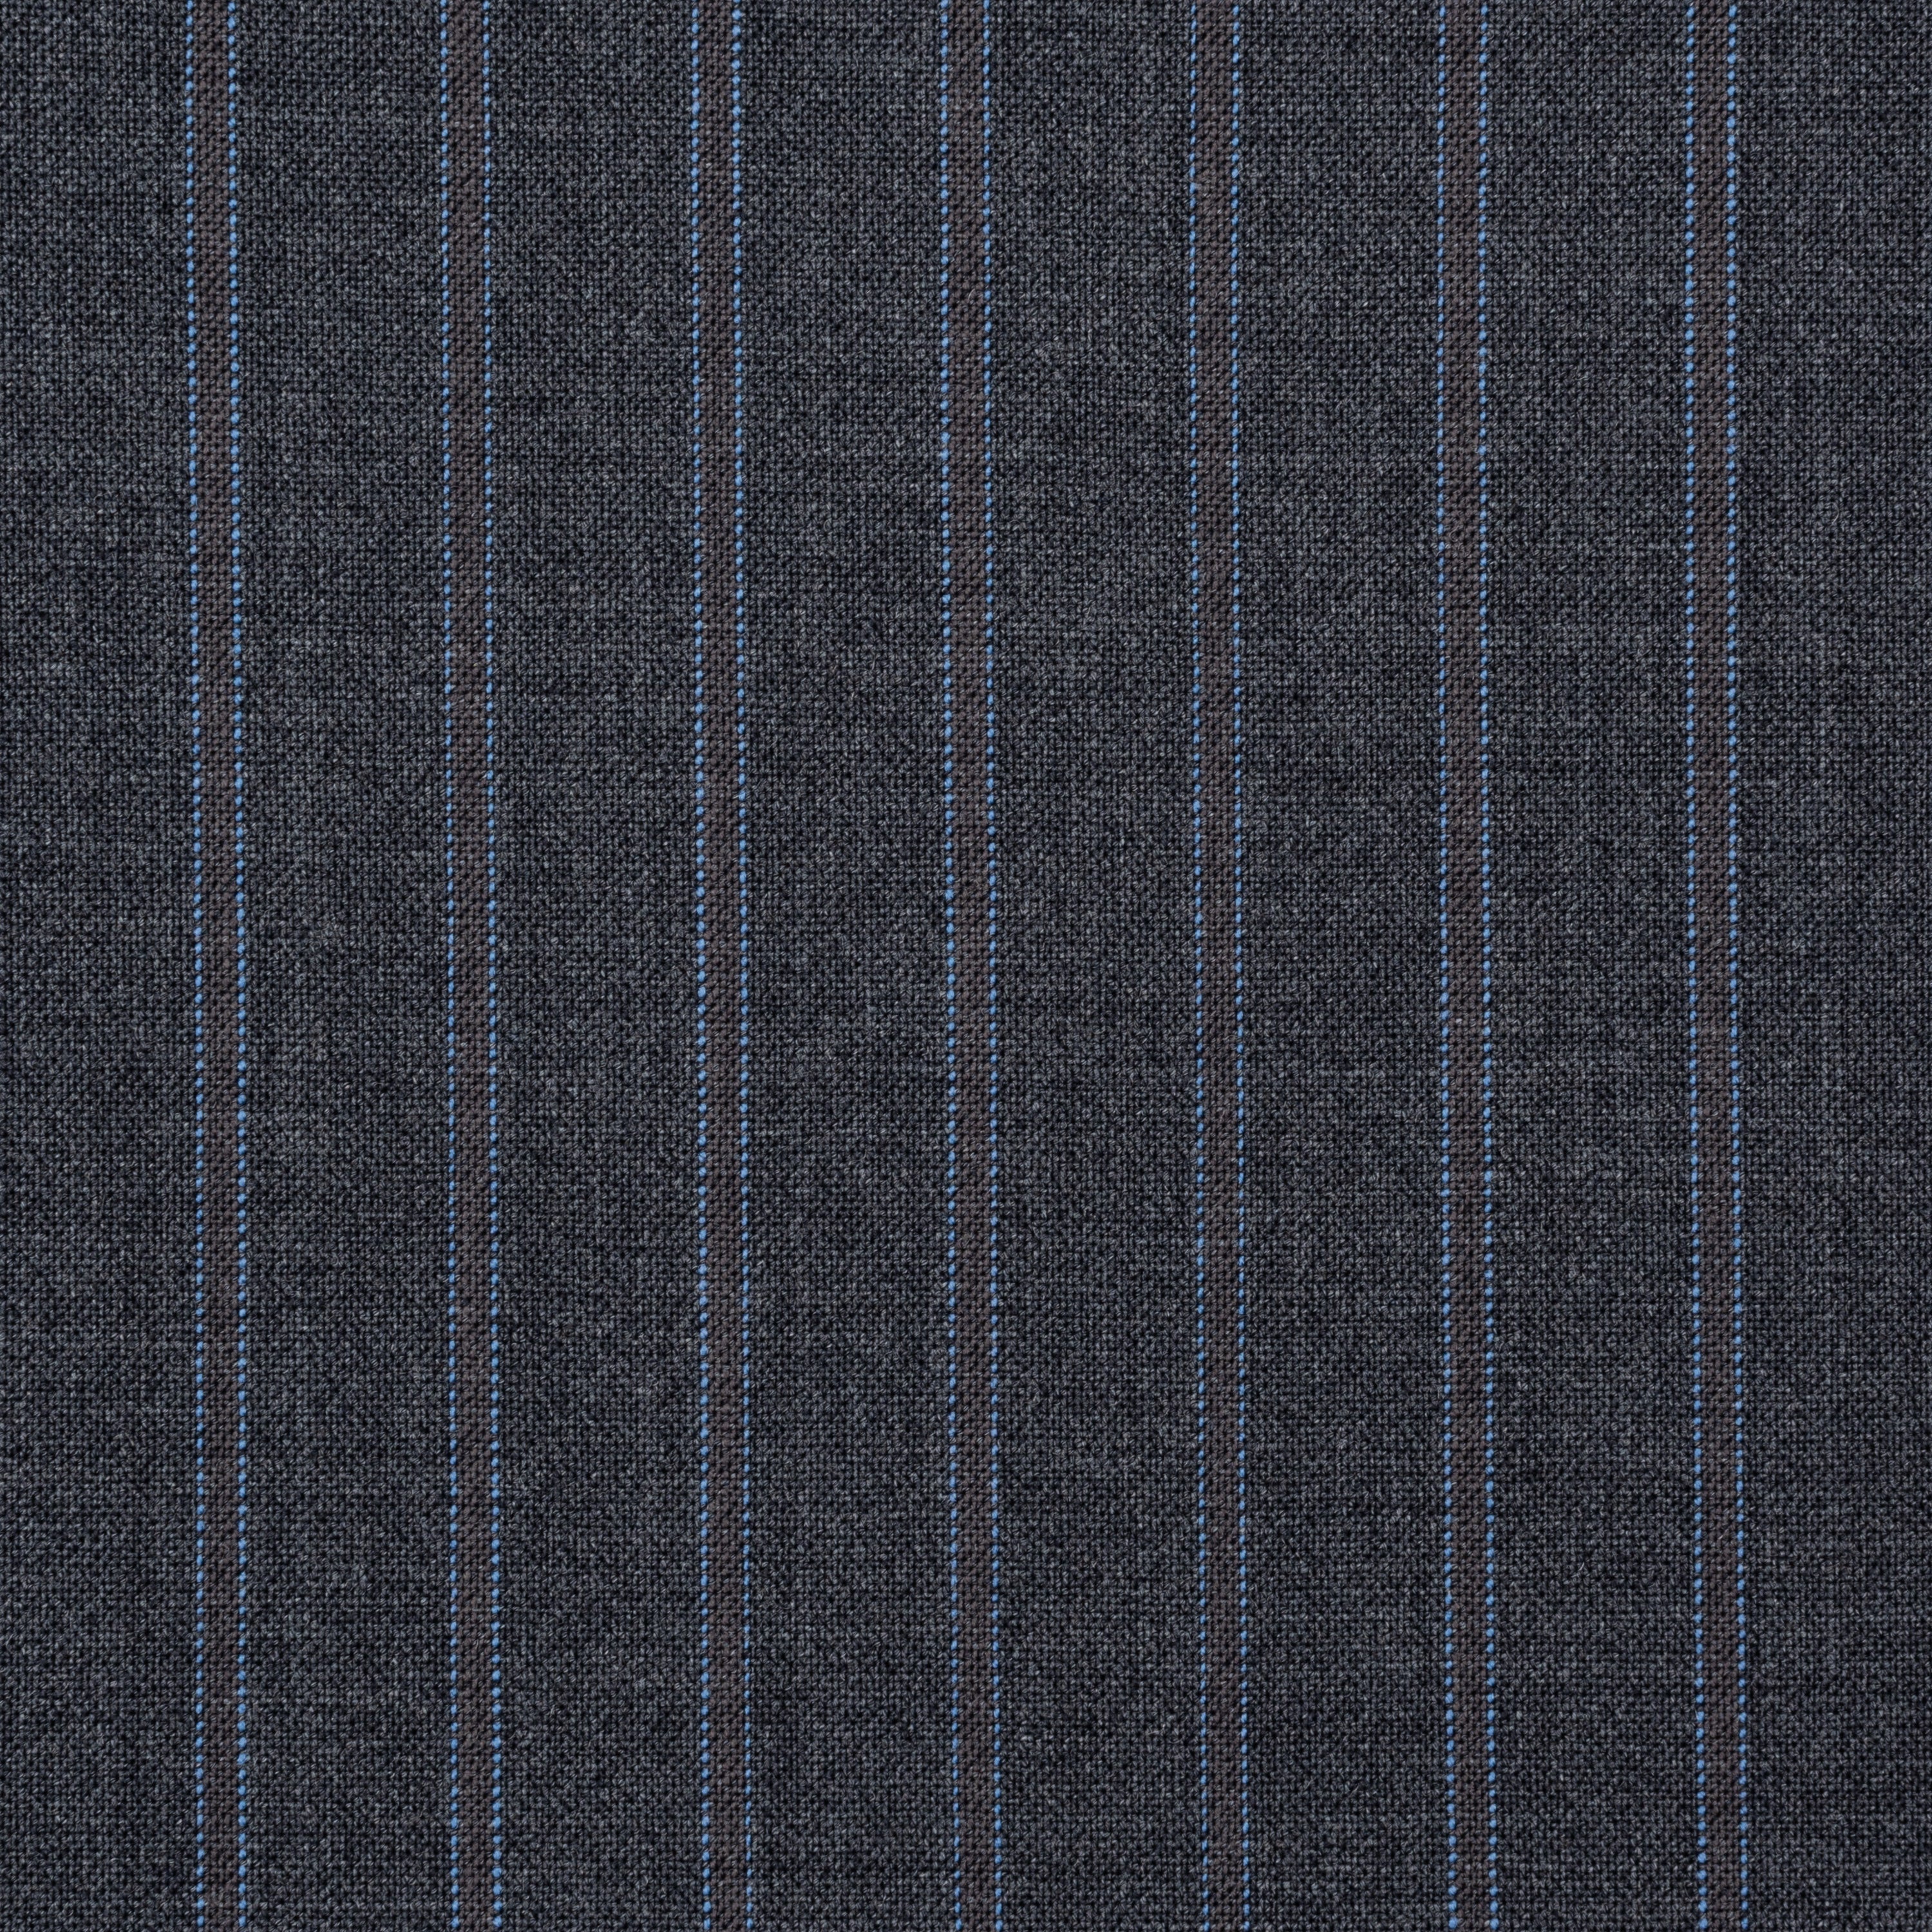 SARTORIA CASTANGIA Gray Striped Wool Super 110's Business Suit EU 48 NEW US 38 CASTANGIA